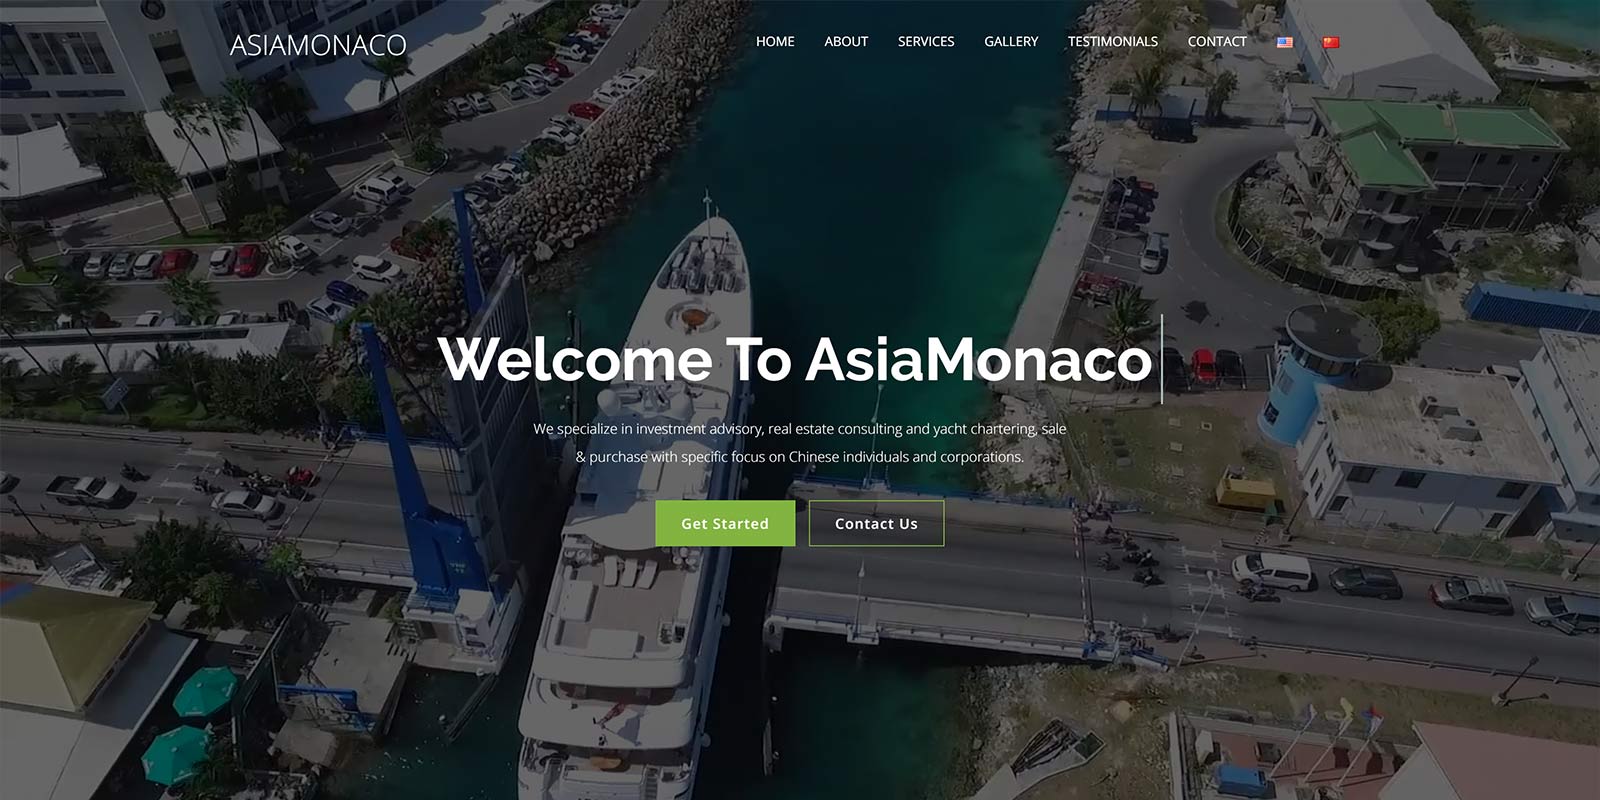 Asia Monaco